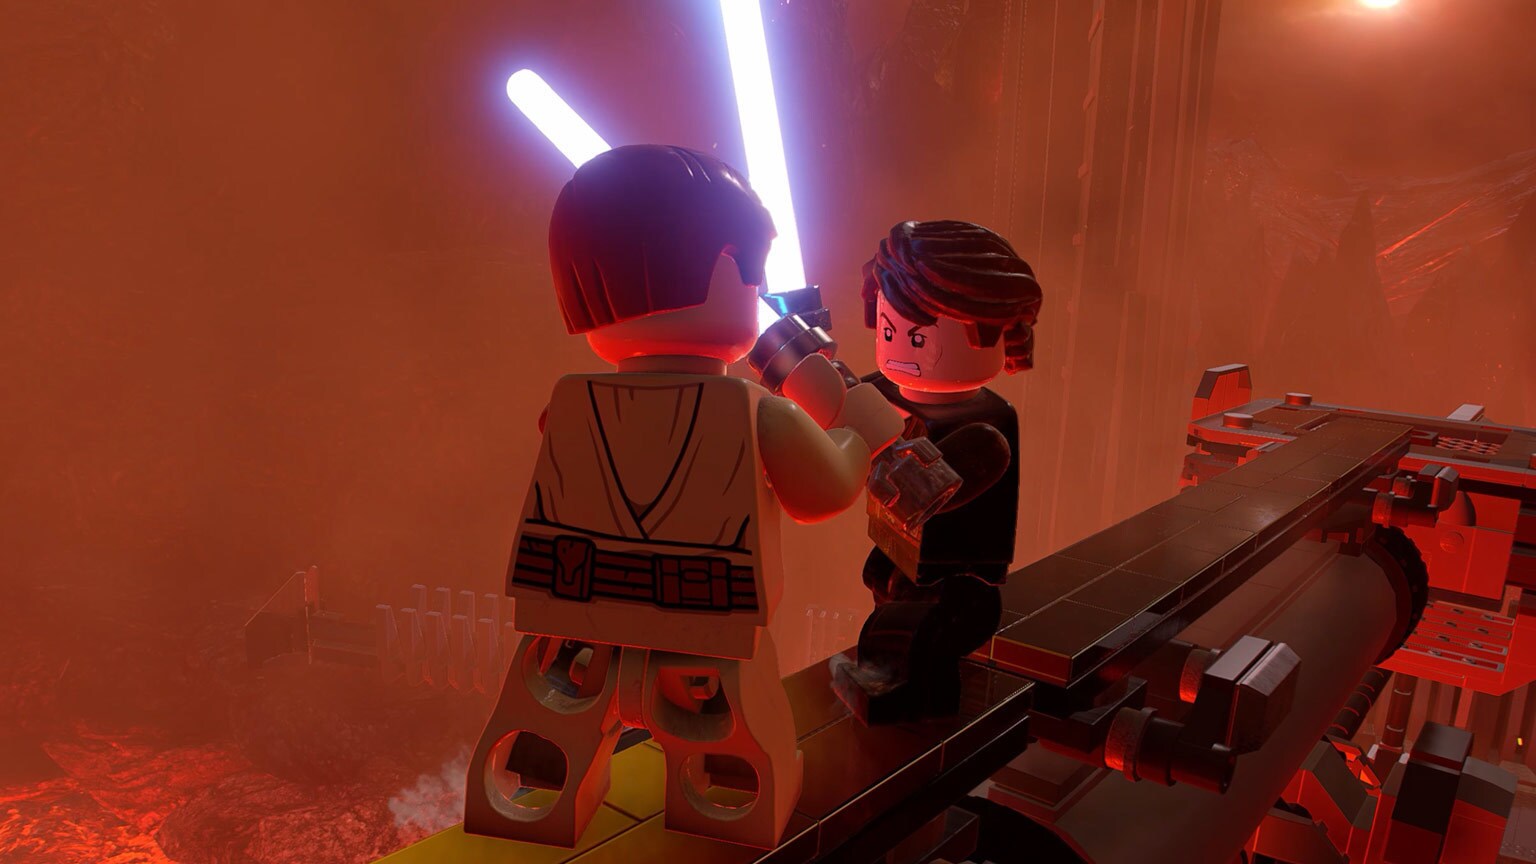 LEGO Star Wars The Skywalker Saga NEWS: Characters + Vehicles